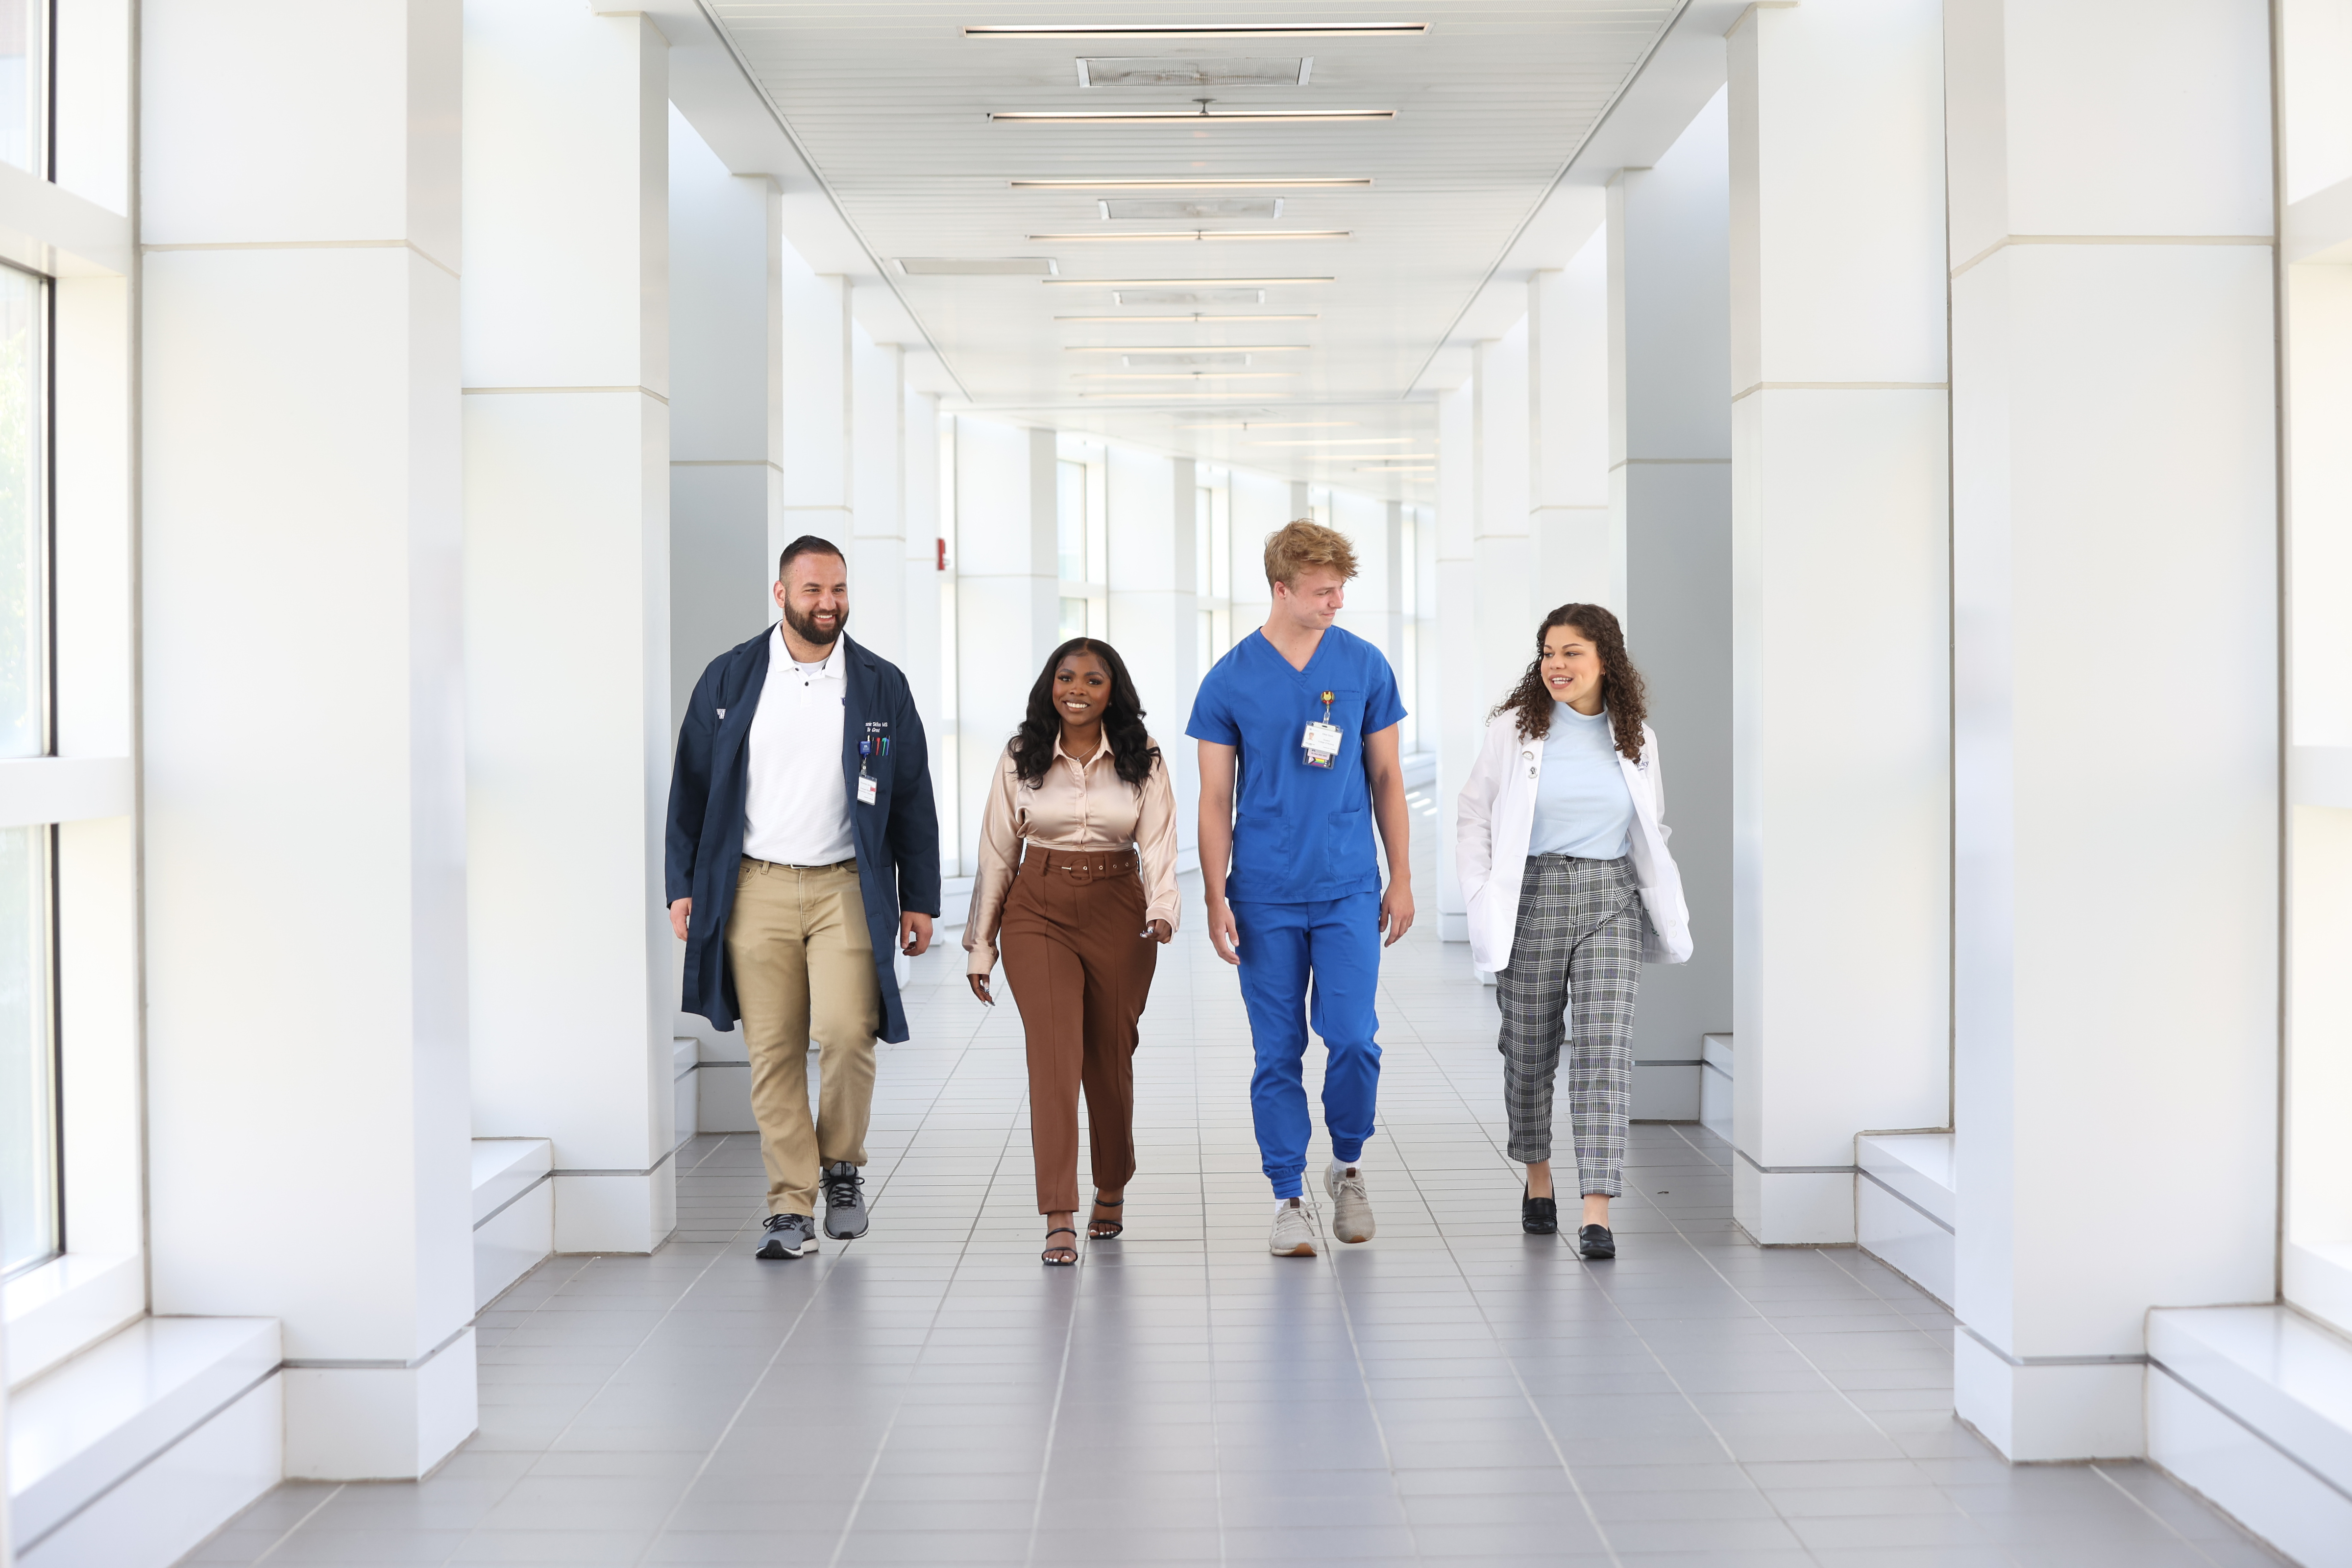 Four students representing medicine, public health, nursing and health science walking down a corridor.